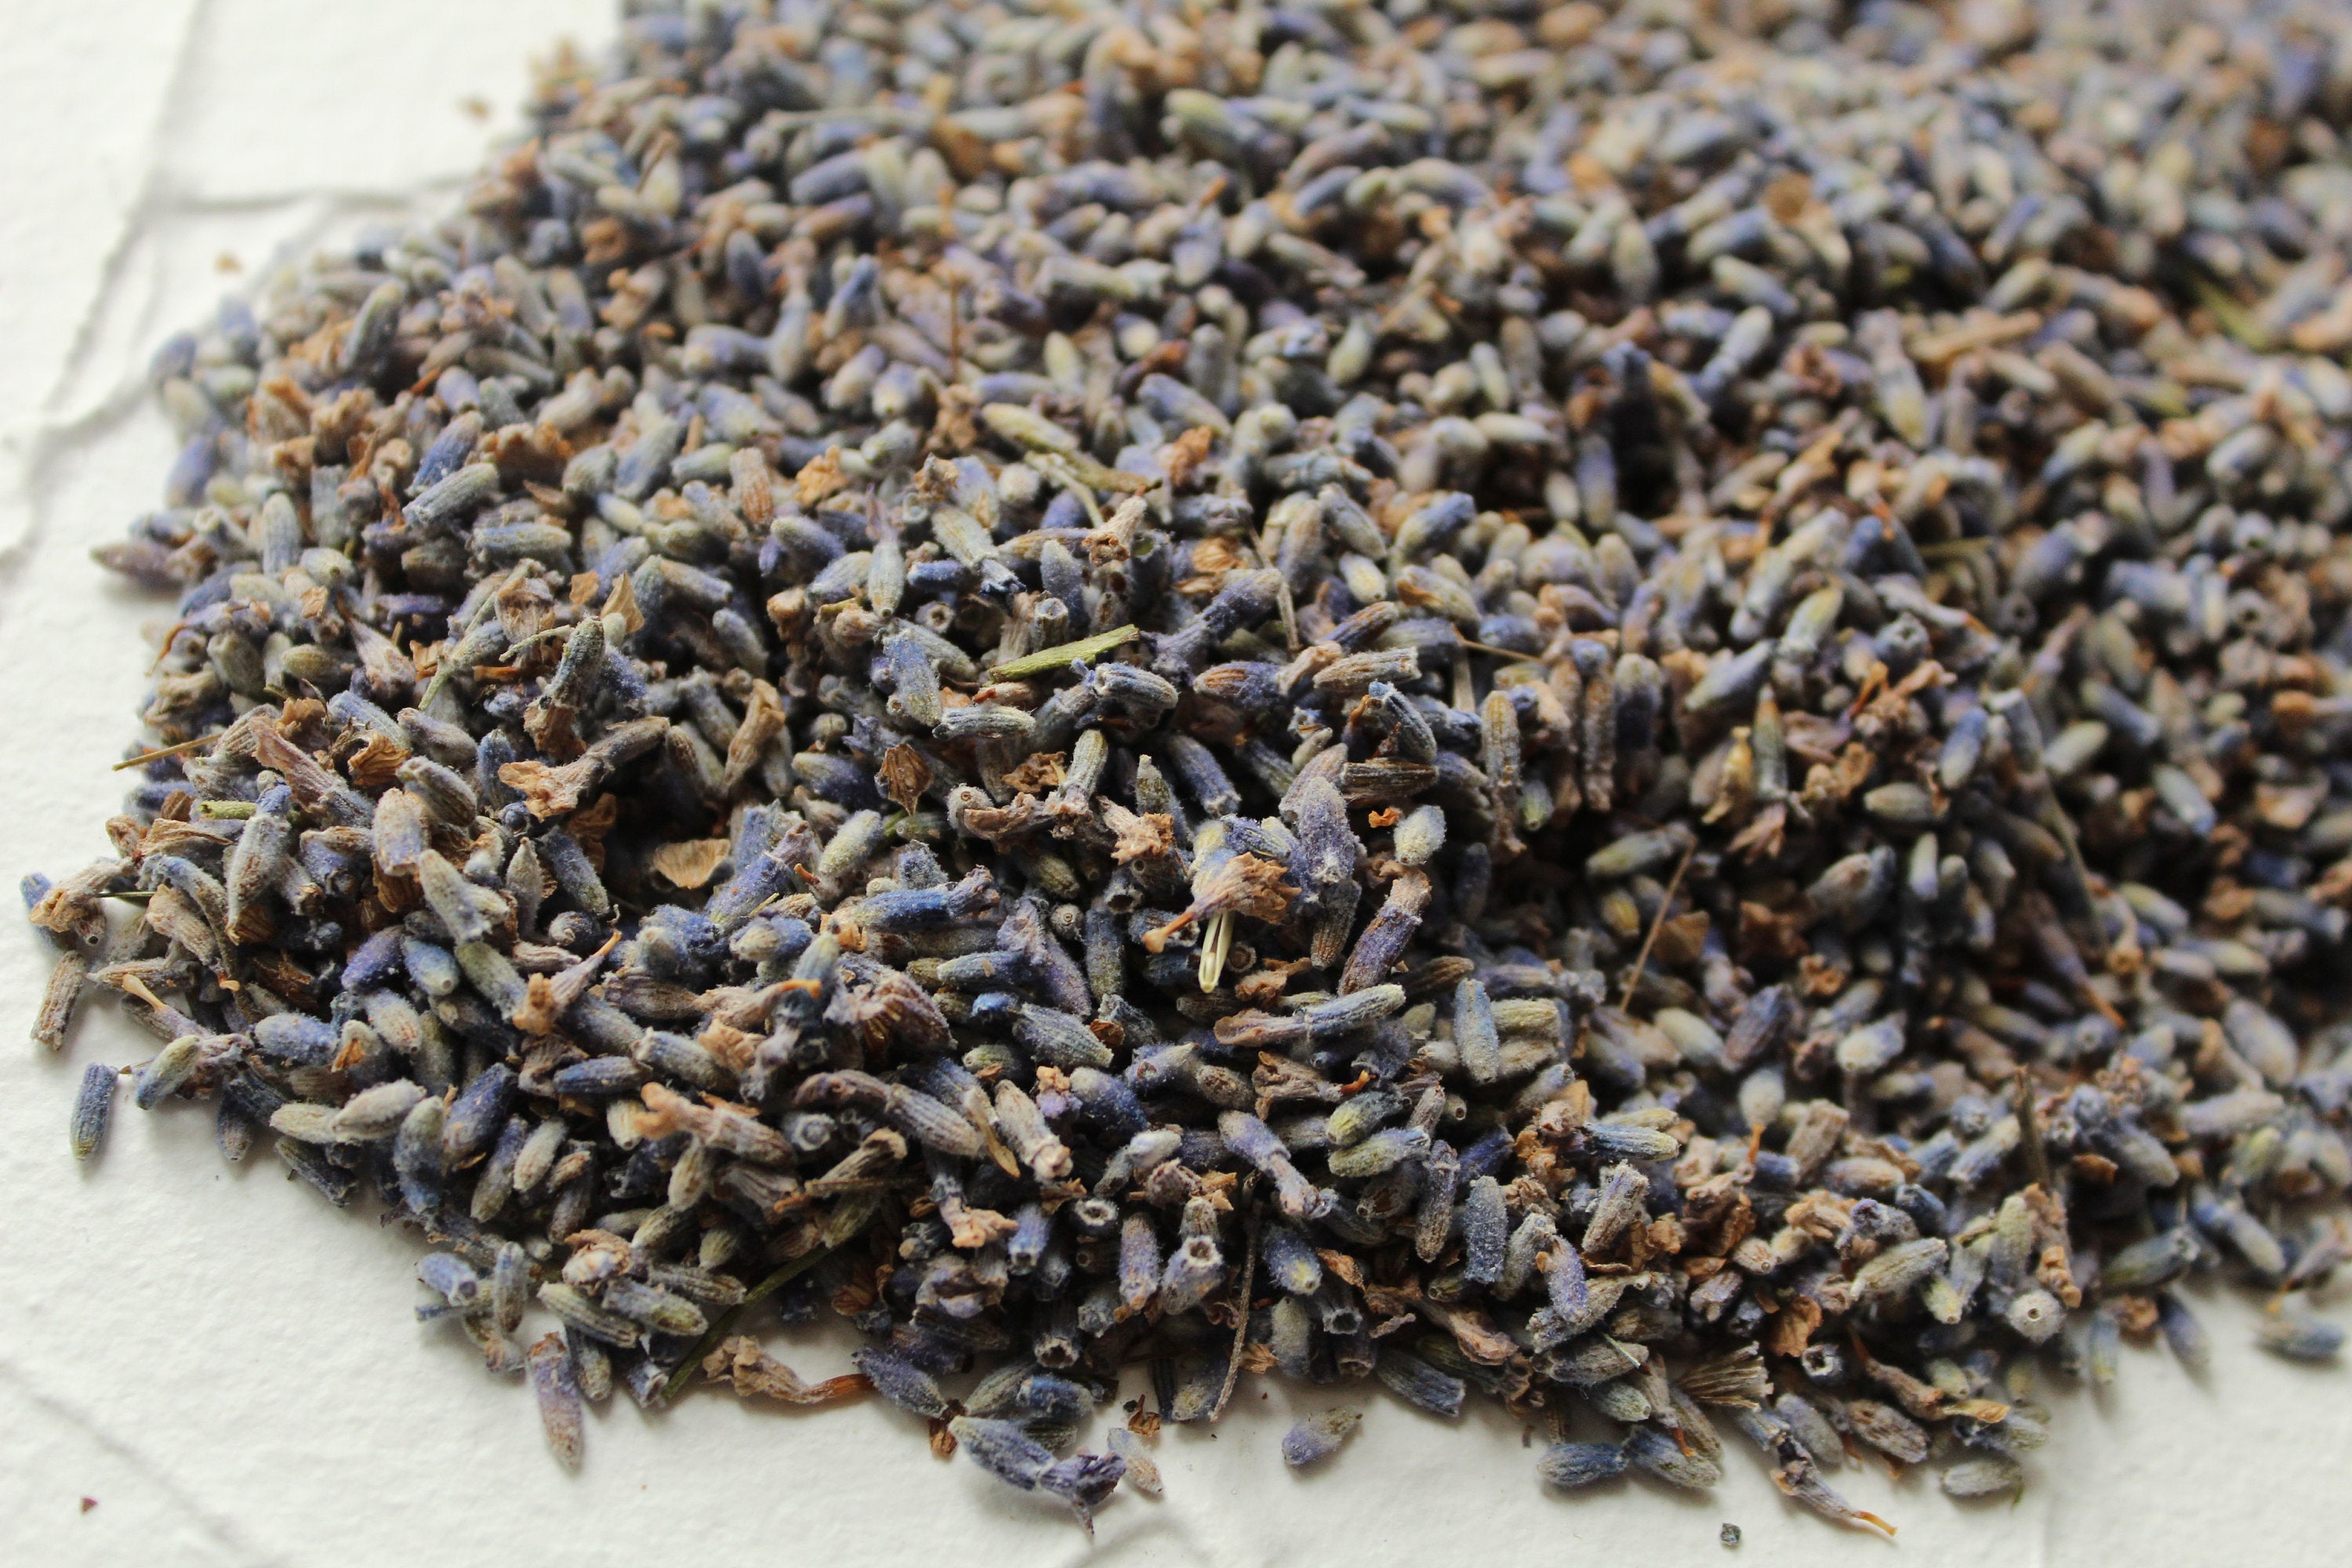  Dried Lavender Flower Buds for Crafts, Baking, Tea